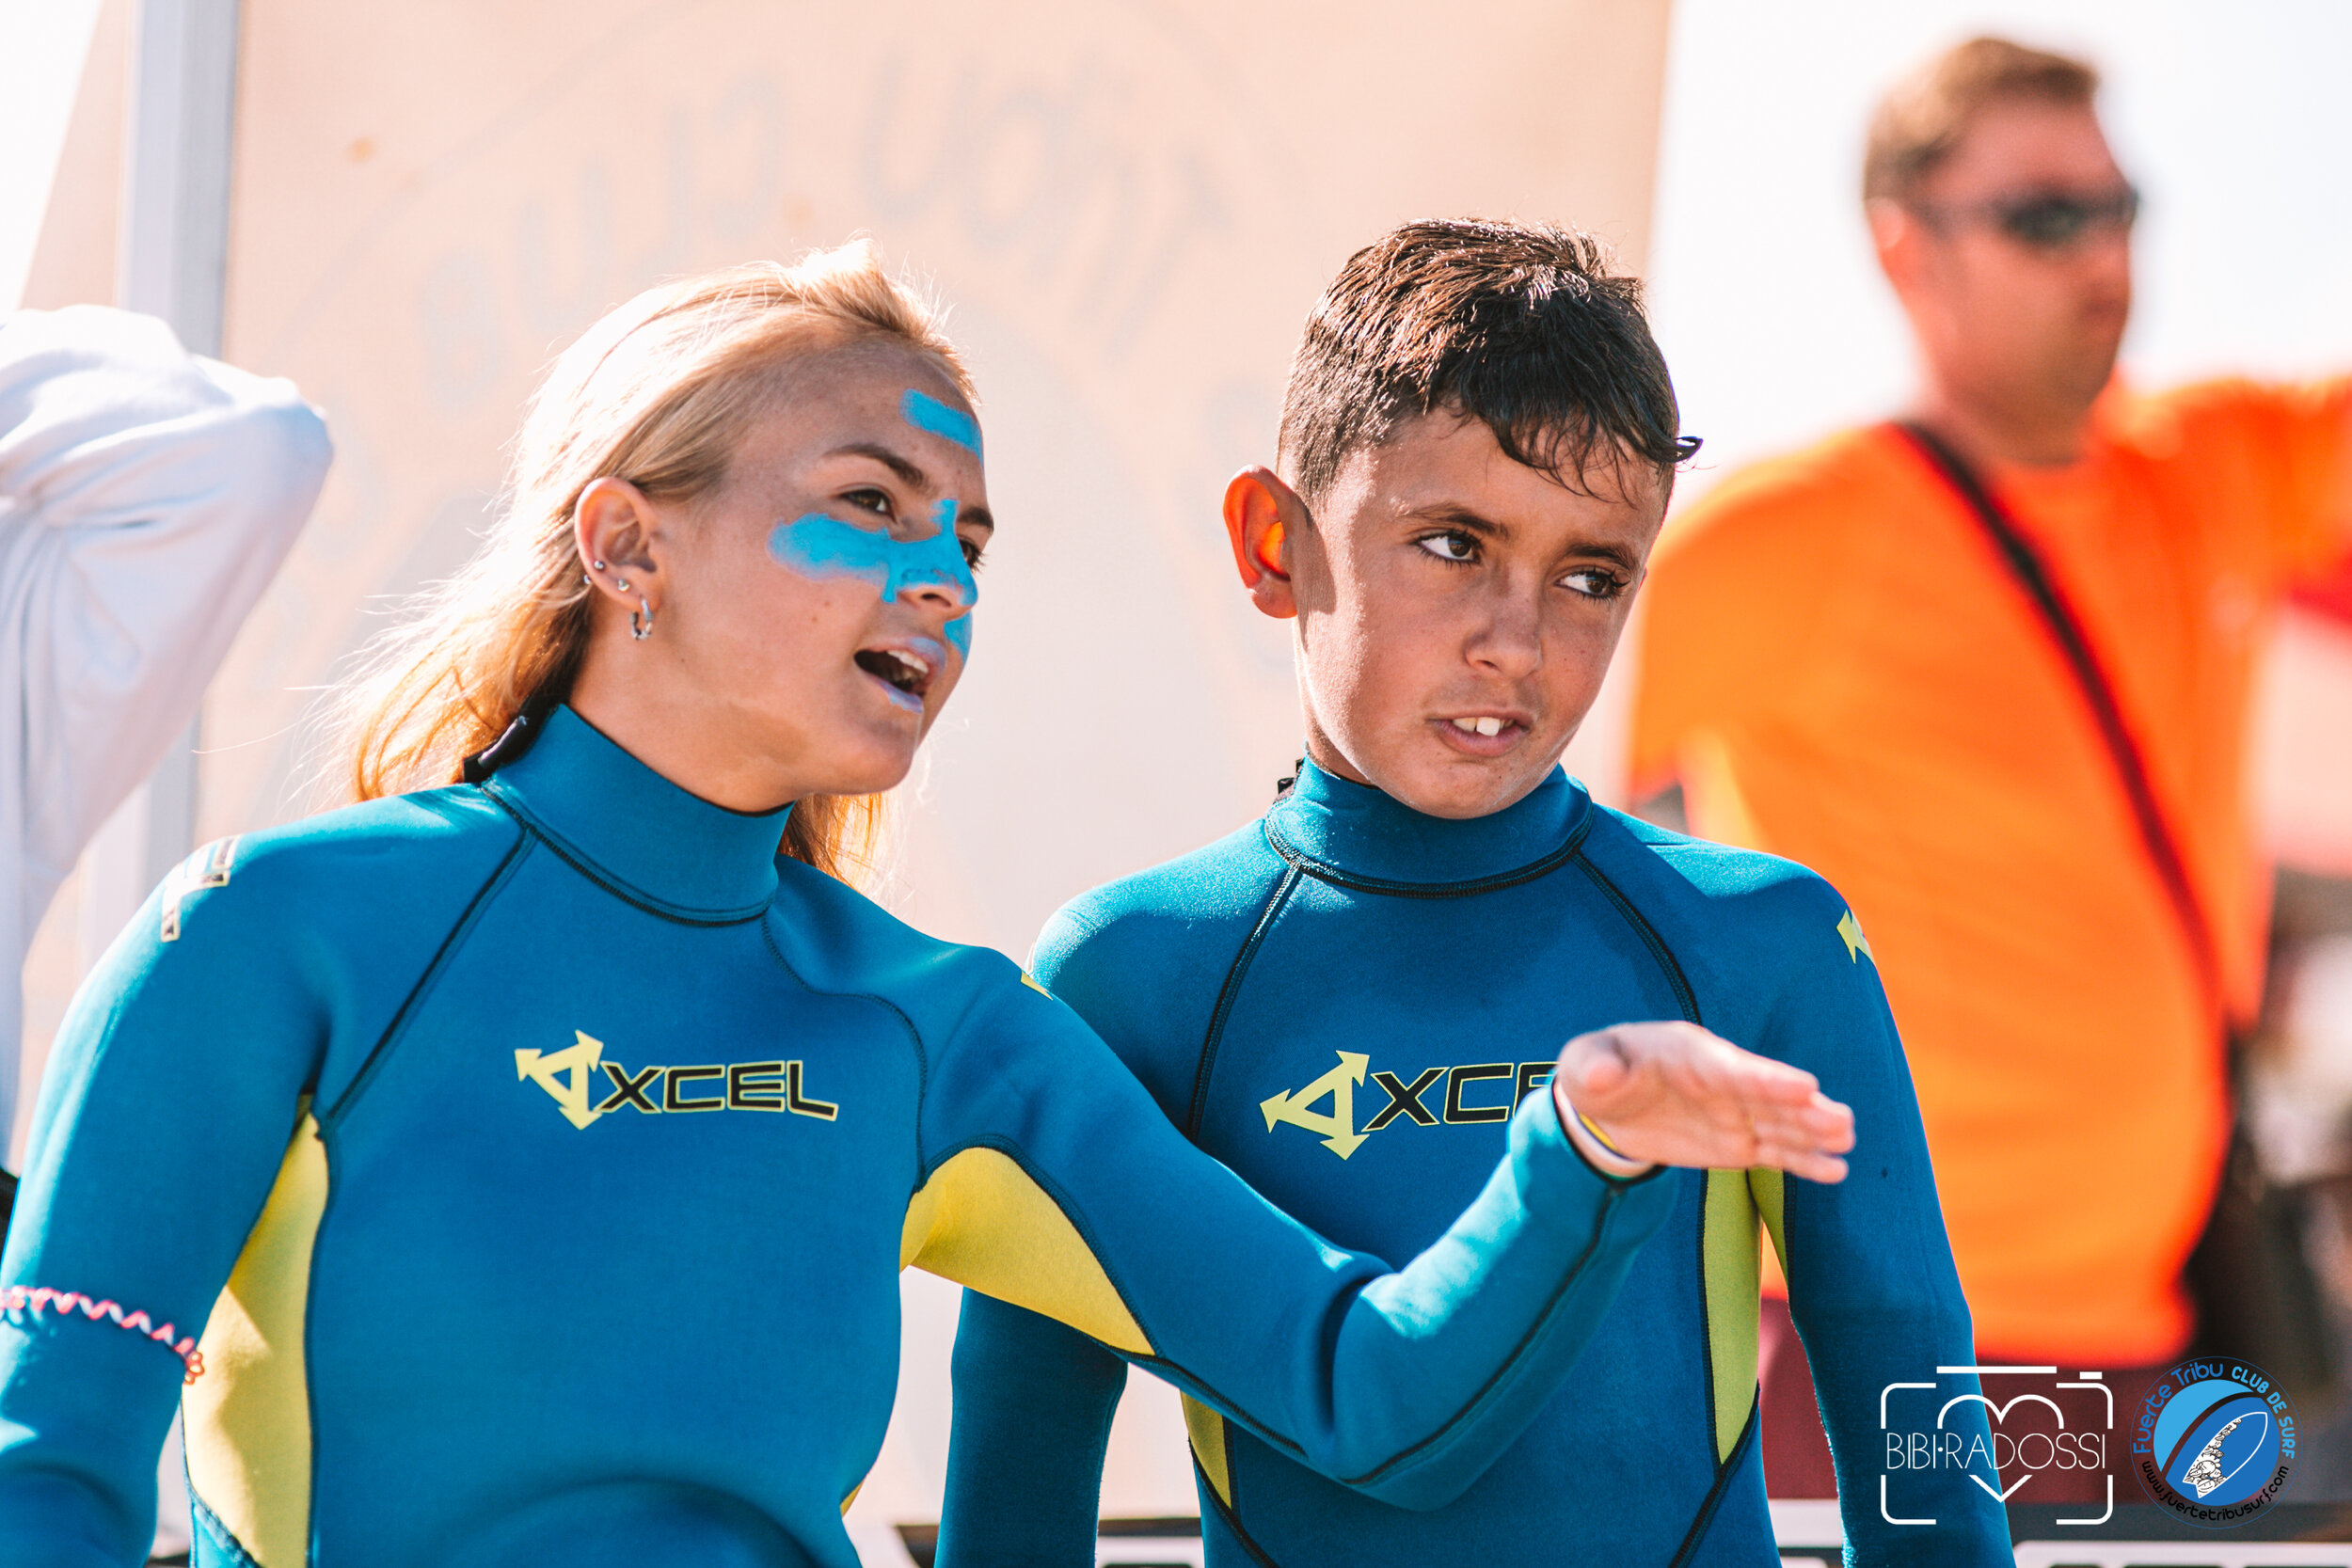 %40bibi Radossi Campeonato Fuertetribu Surfkids Surfschool FT+intraclub 82